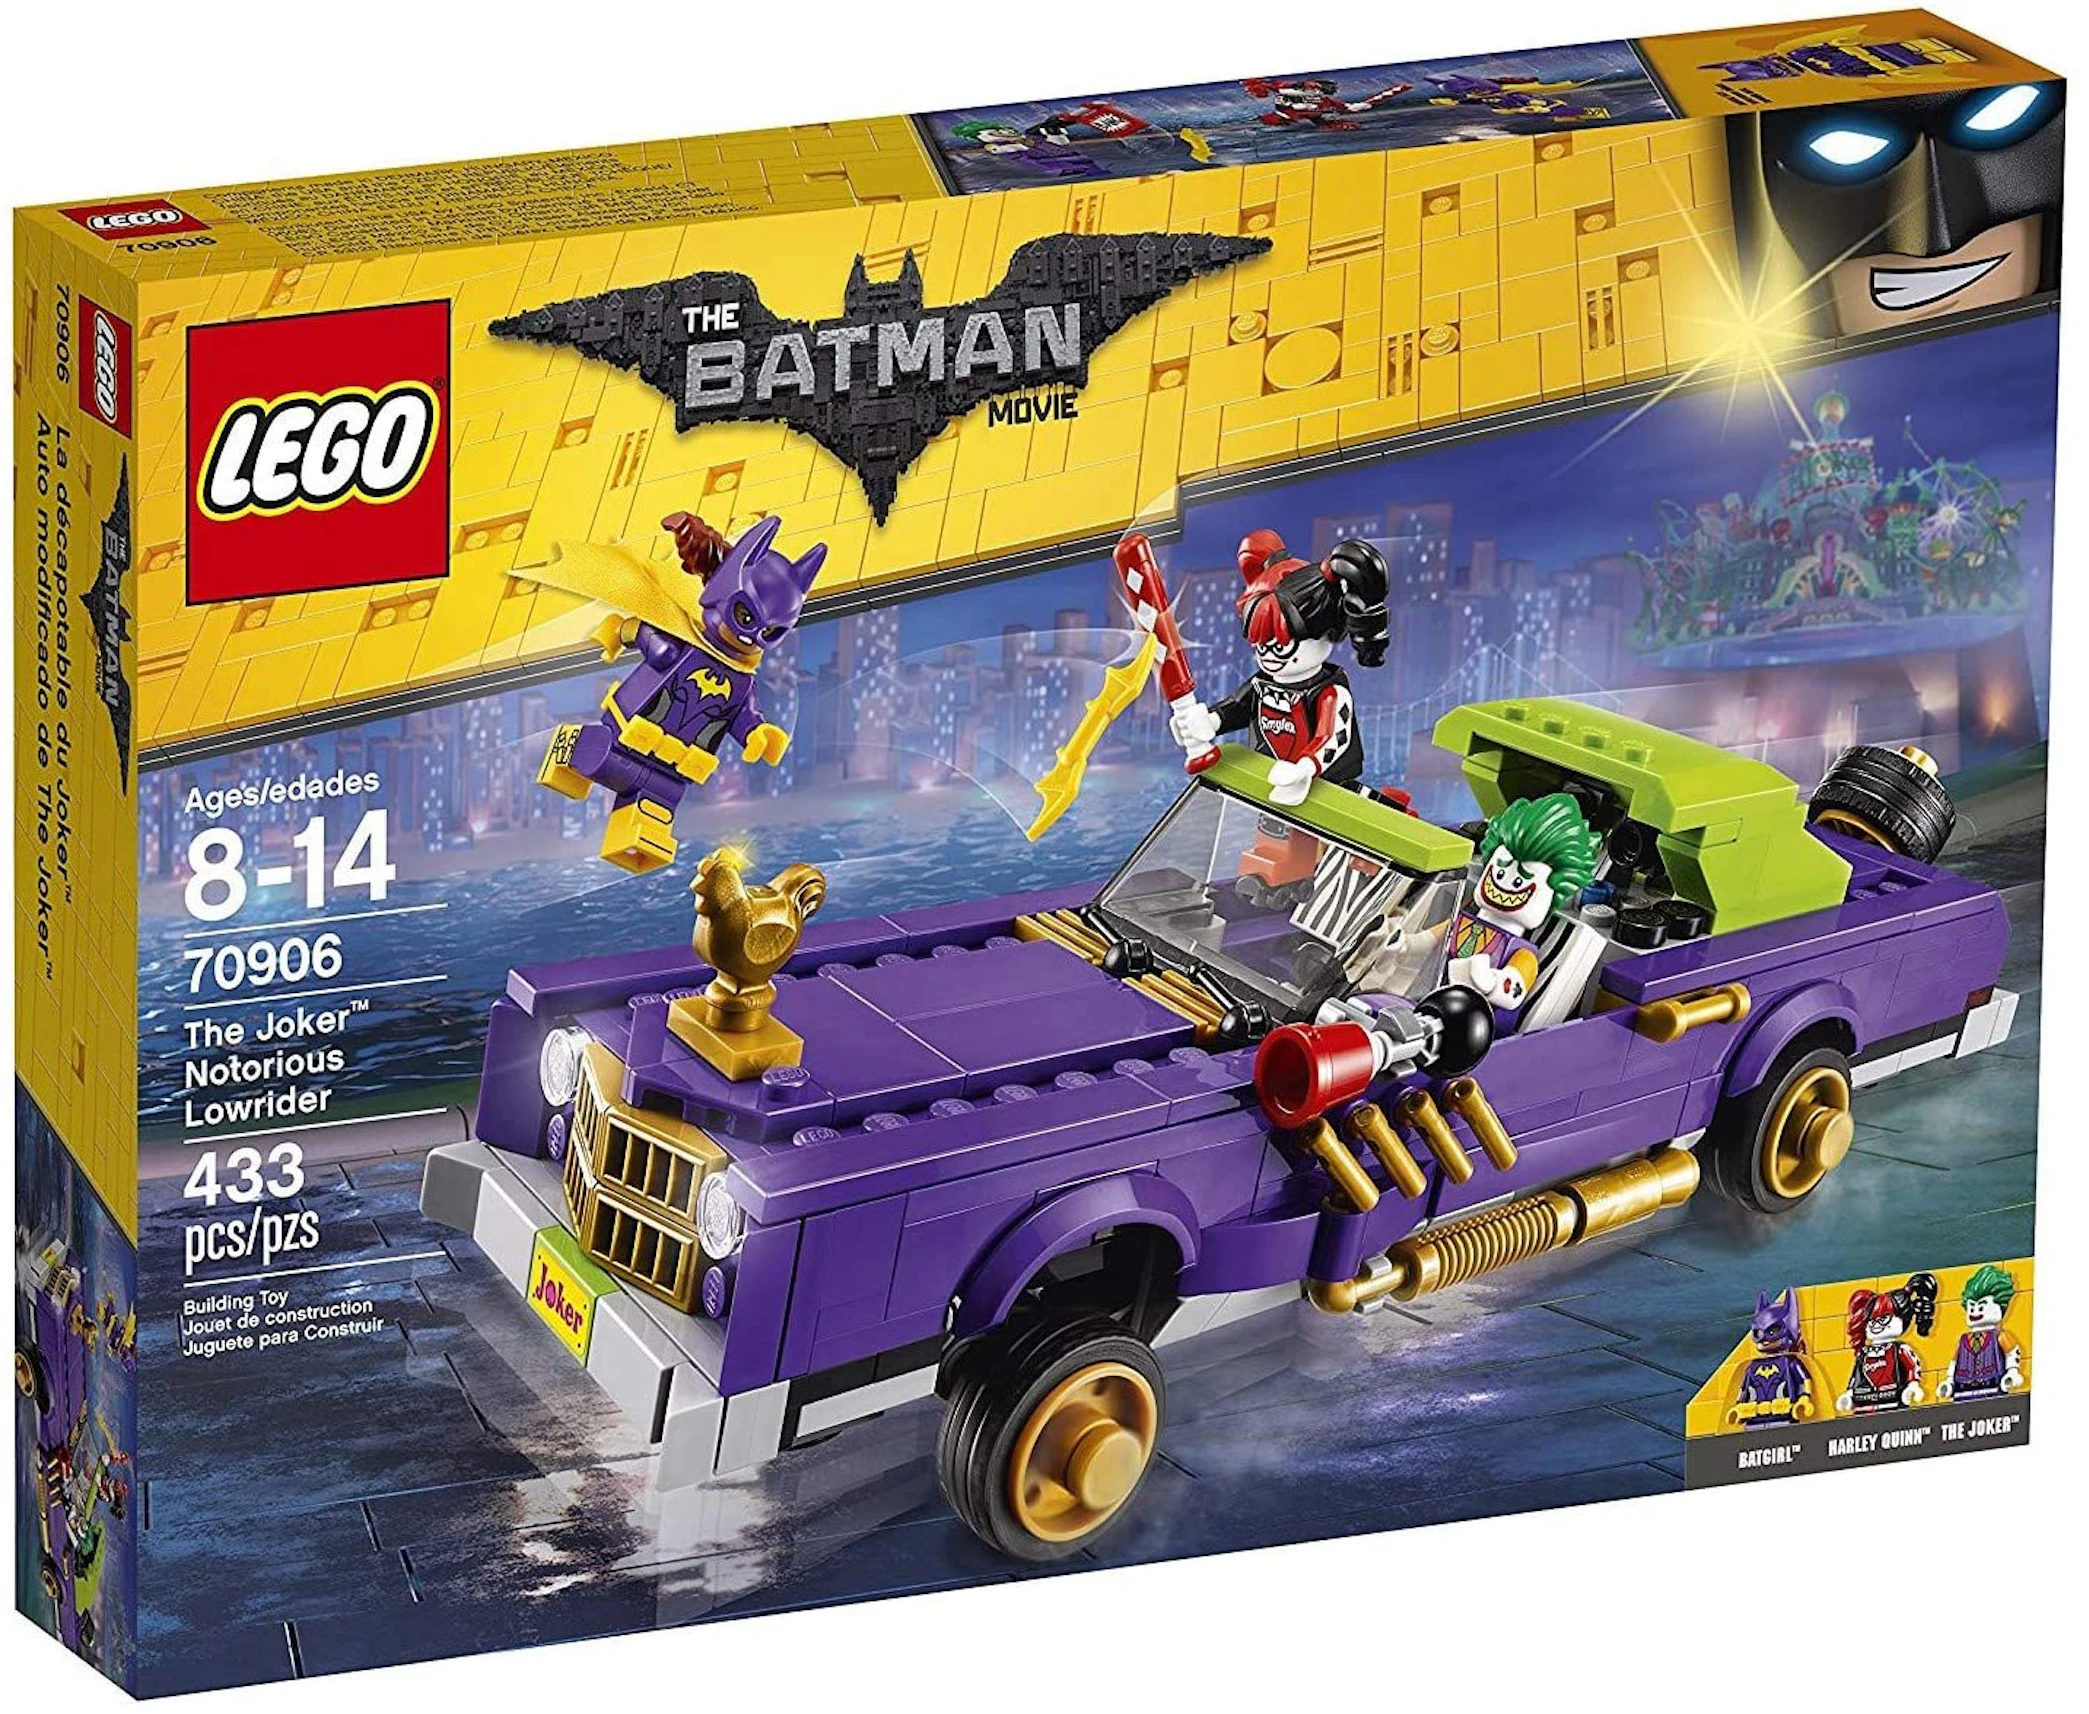 LEGO The LEGO Batman Movie The Joker Notorious Lowrider Set 70906 - US